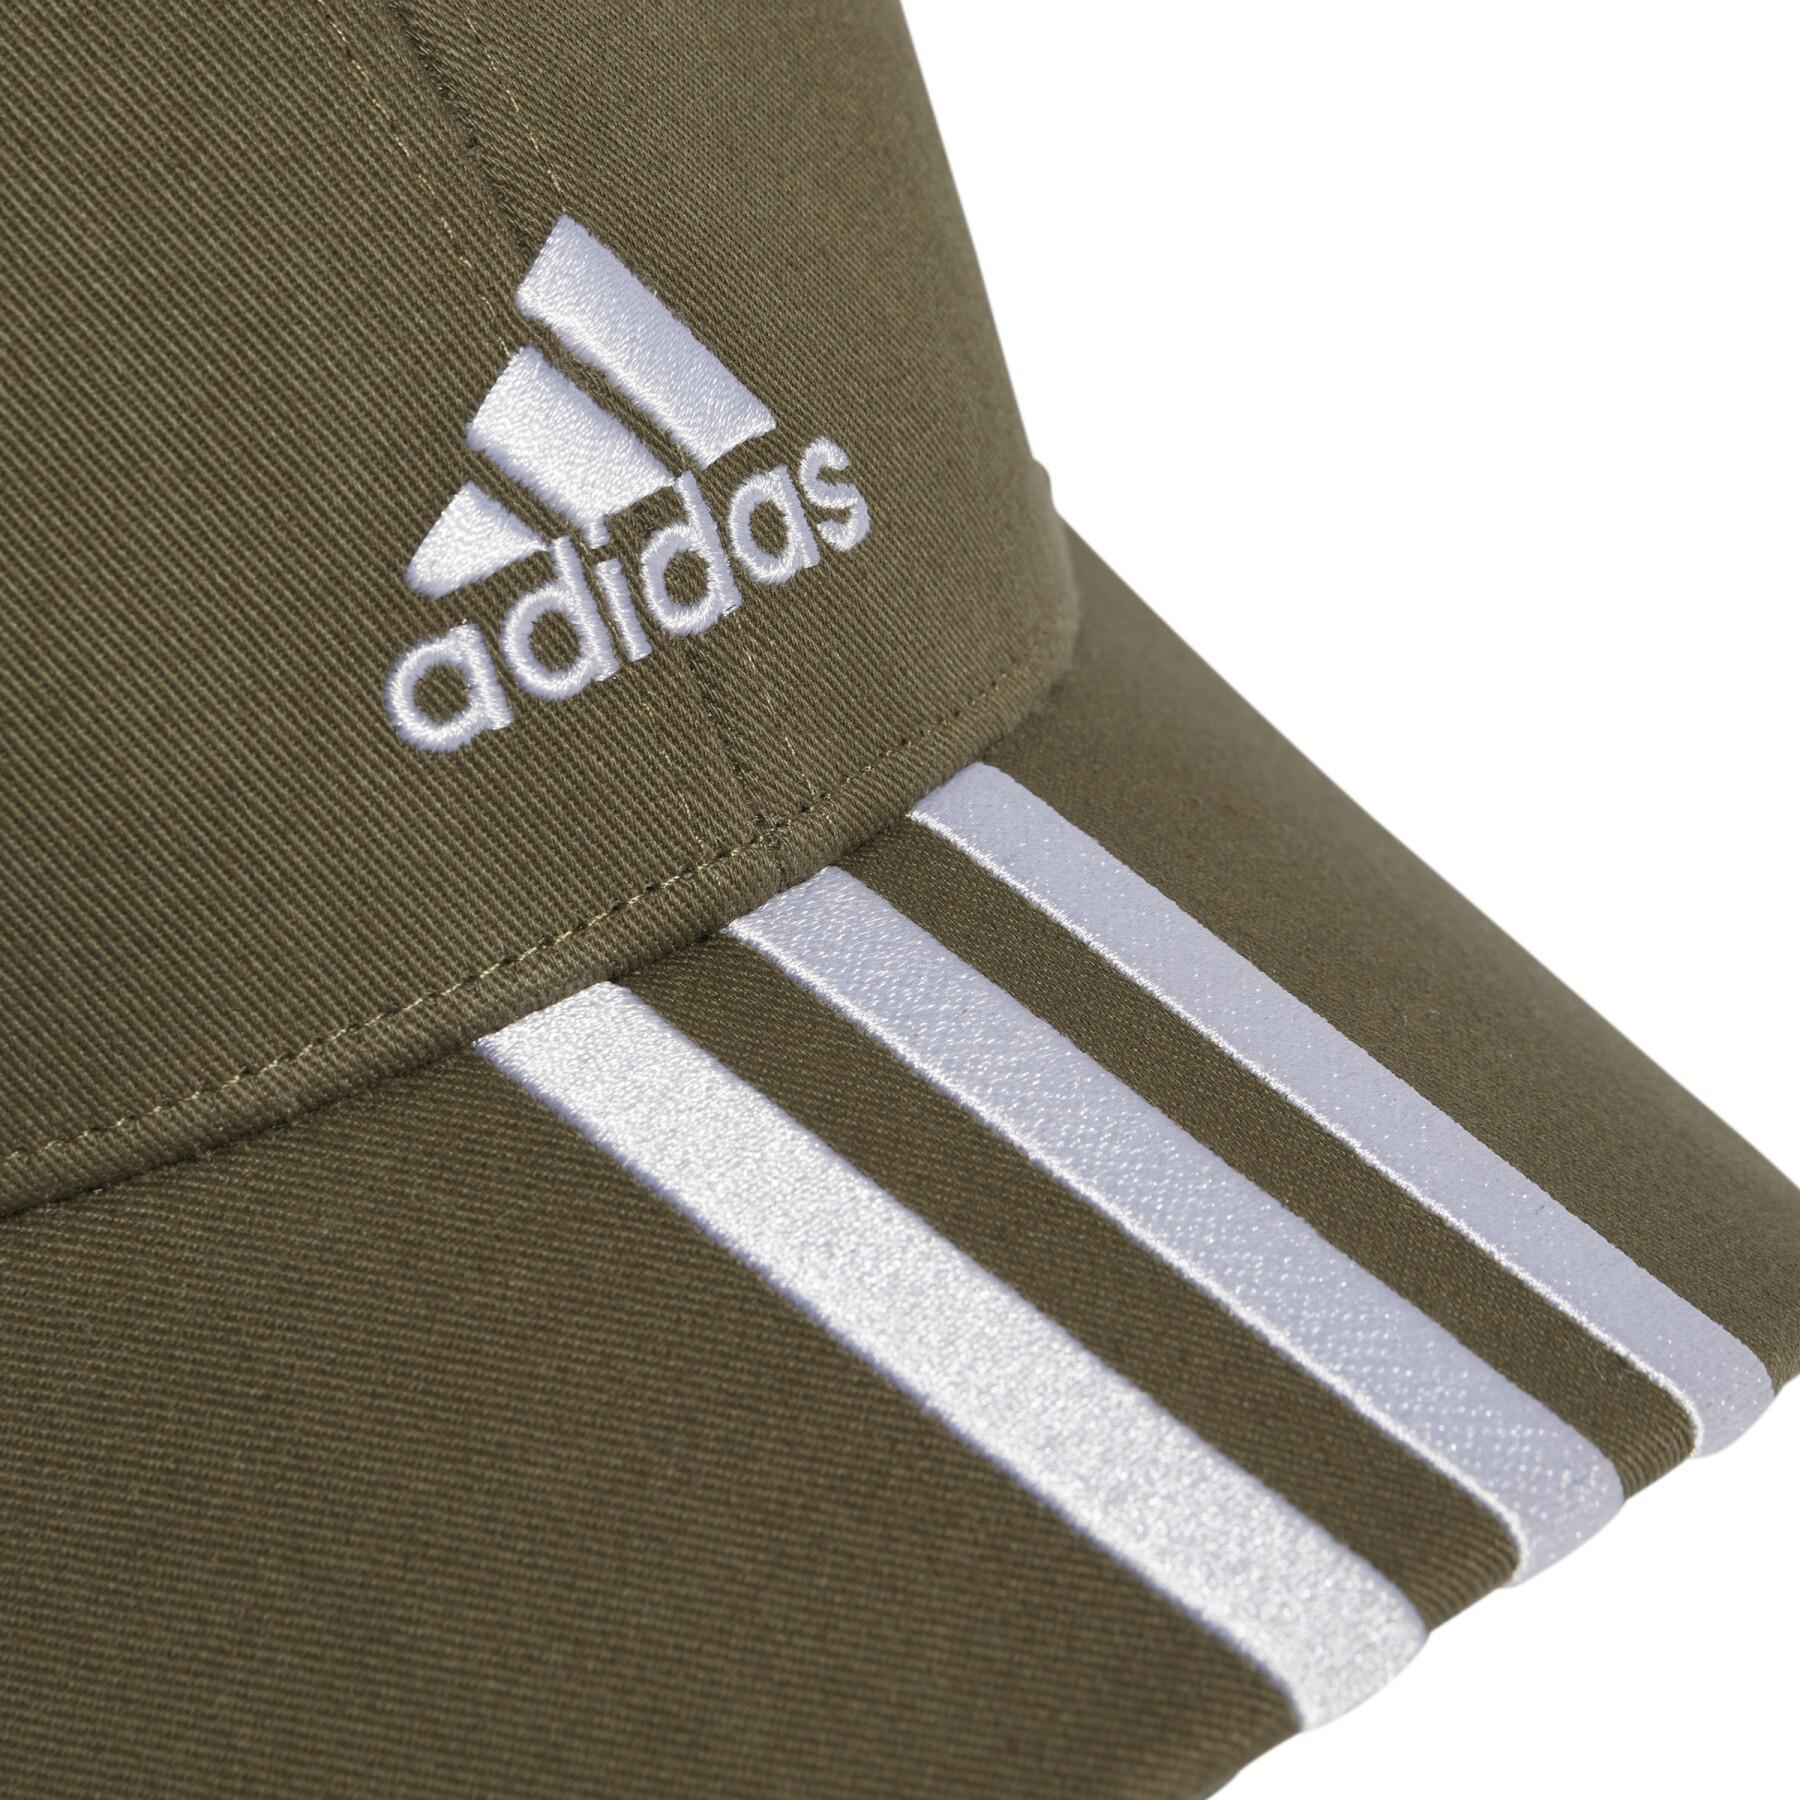 Kappe aus Baumwolltwill Adidas 3-Stripes